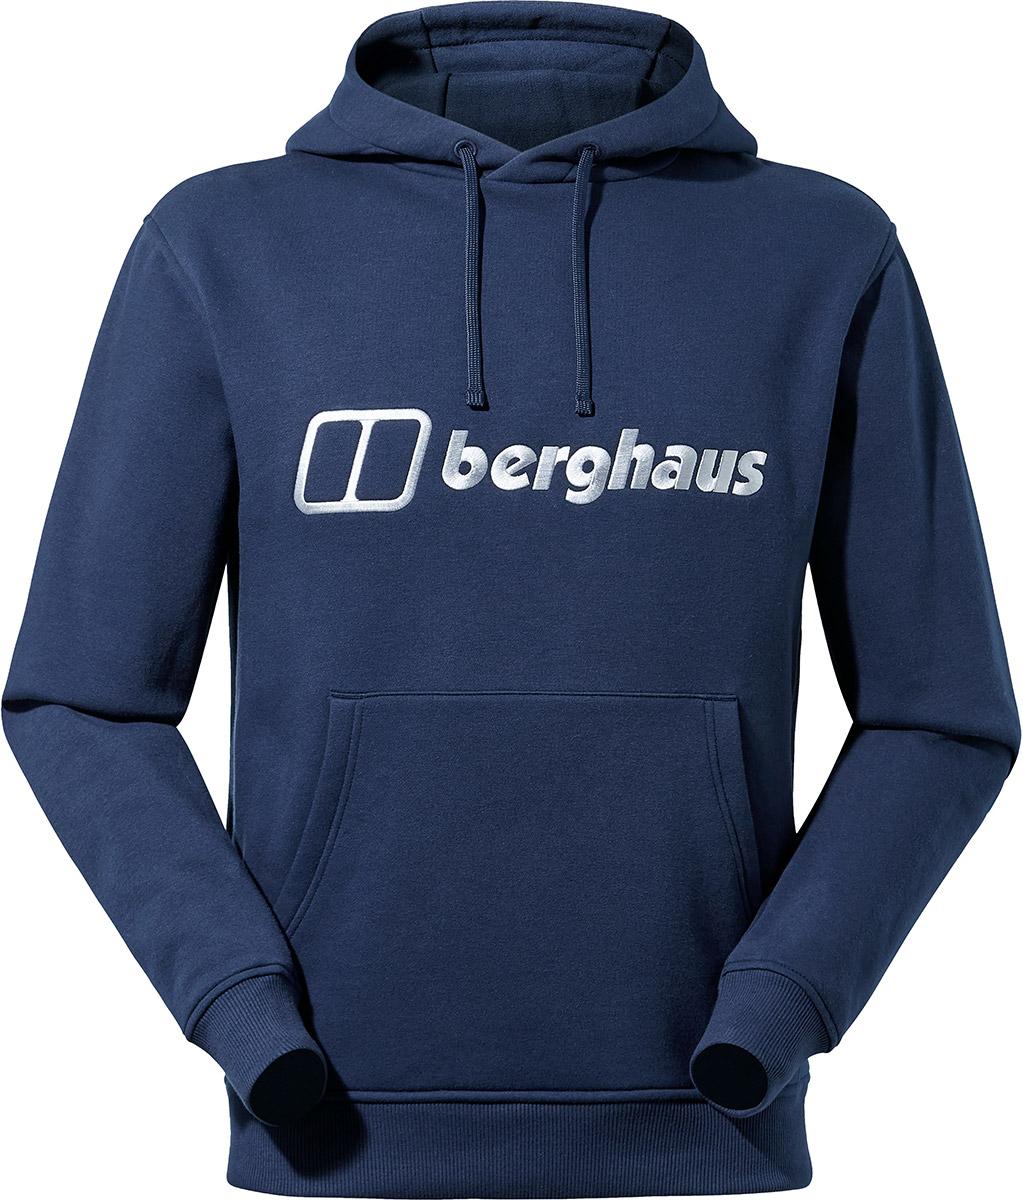 Berghaus Logo Hoody - Dusk